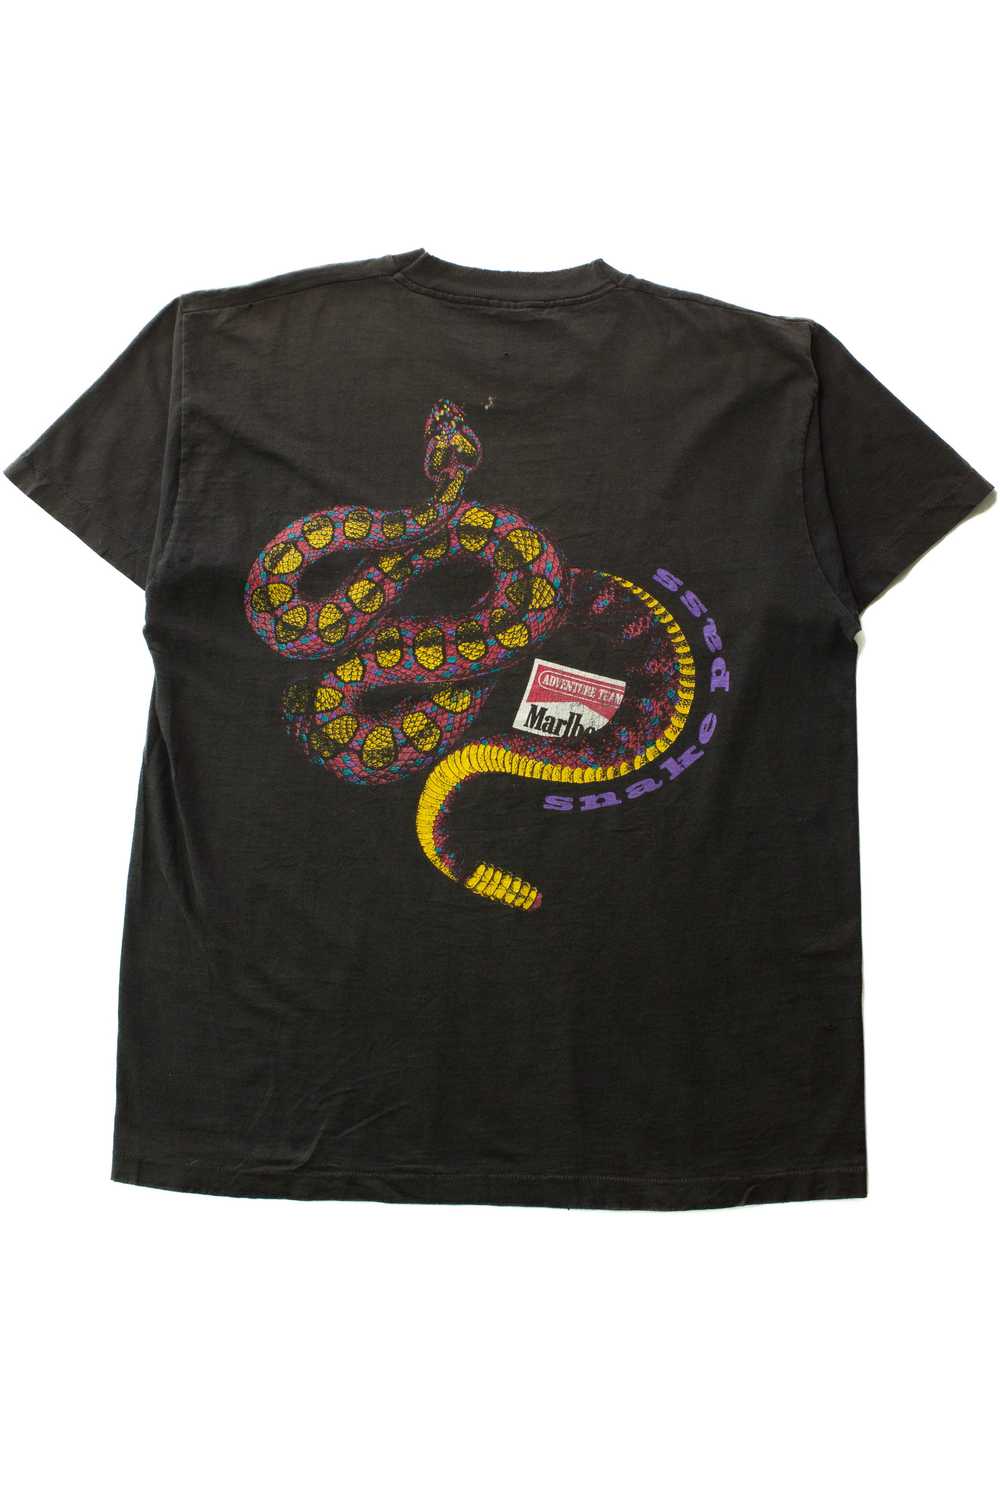 Vintage Marlboro Snake Pass T-Shirt (1990s) - image 2